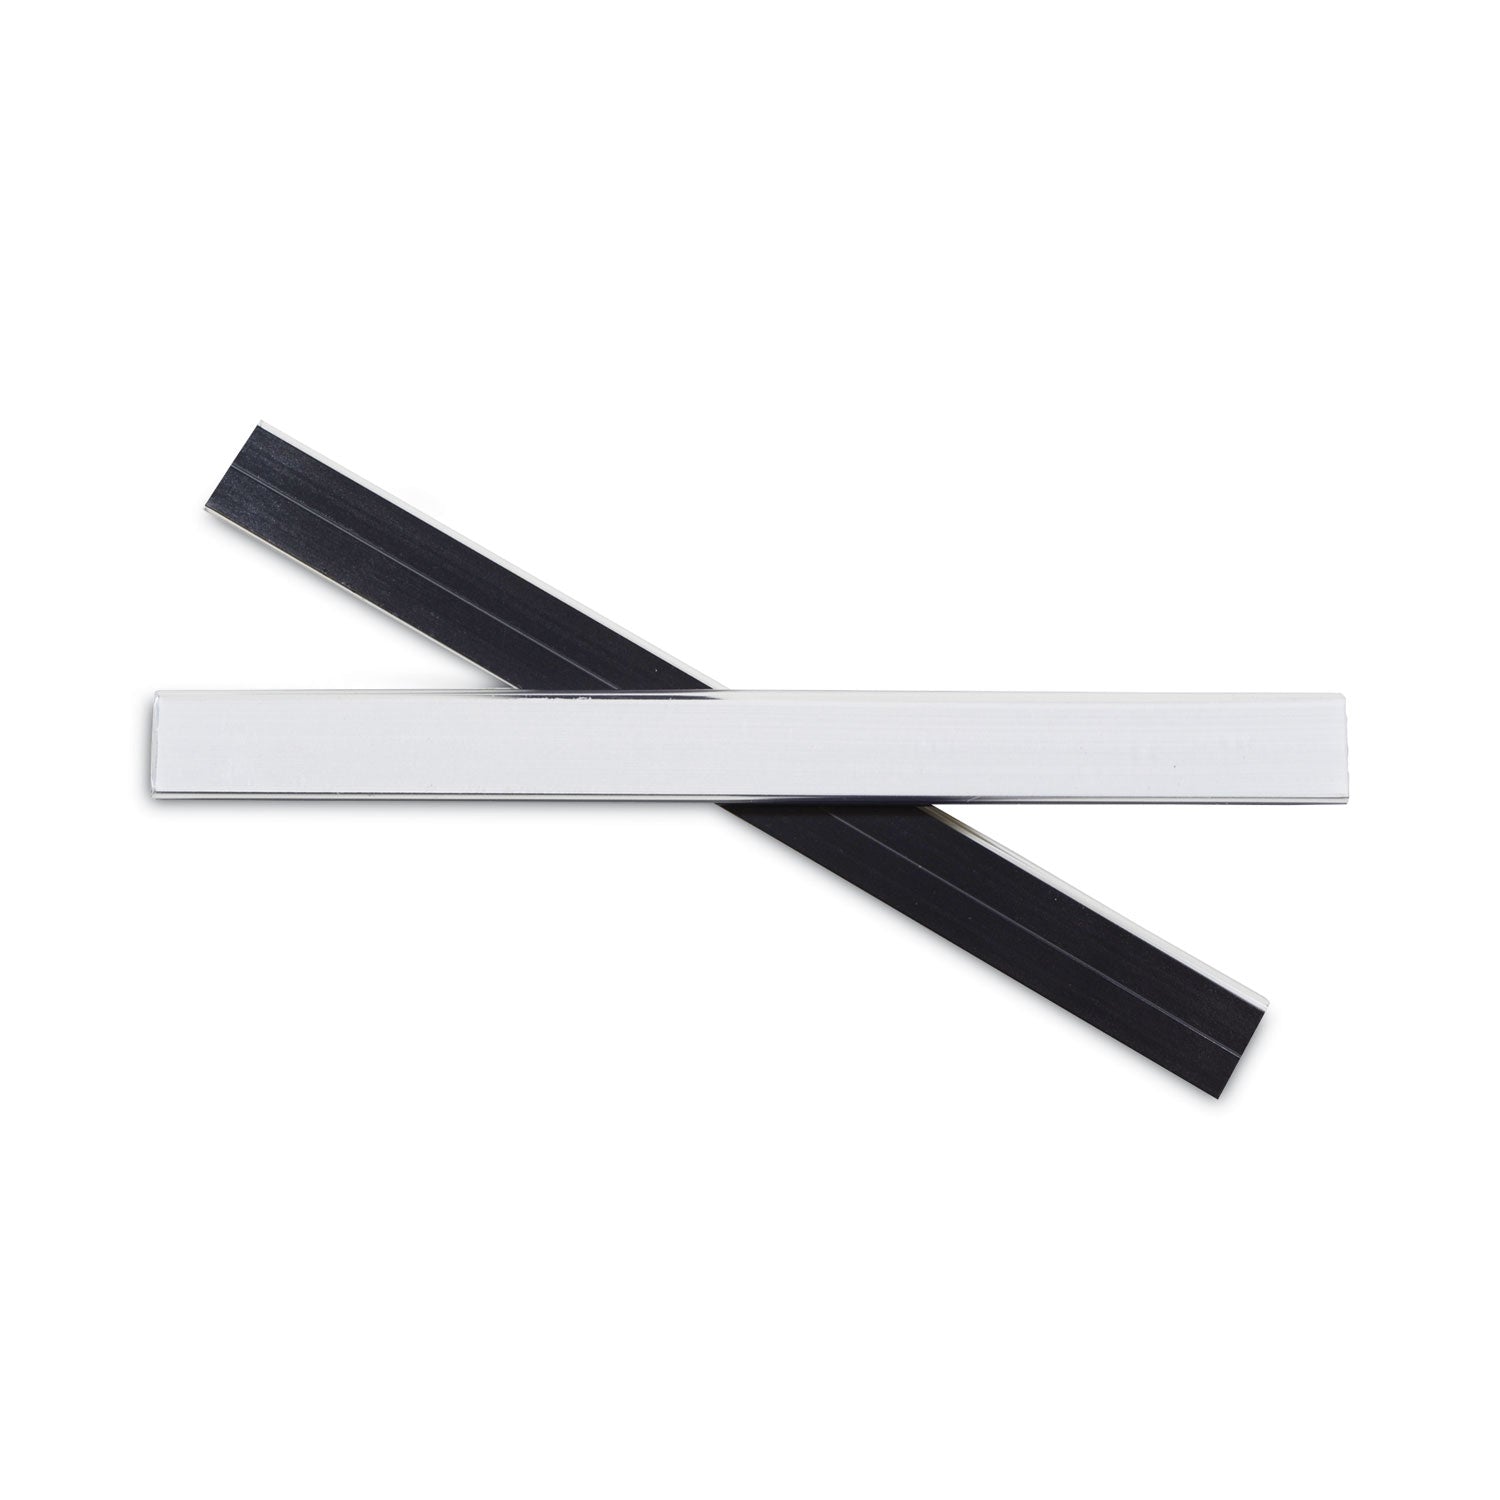 HOL-DEX Magnetic Shelf/Bin Label Holders, Side Load, 0.5 x 6, Clear, 10/Box - 